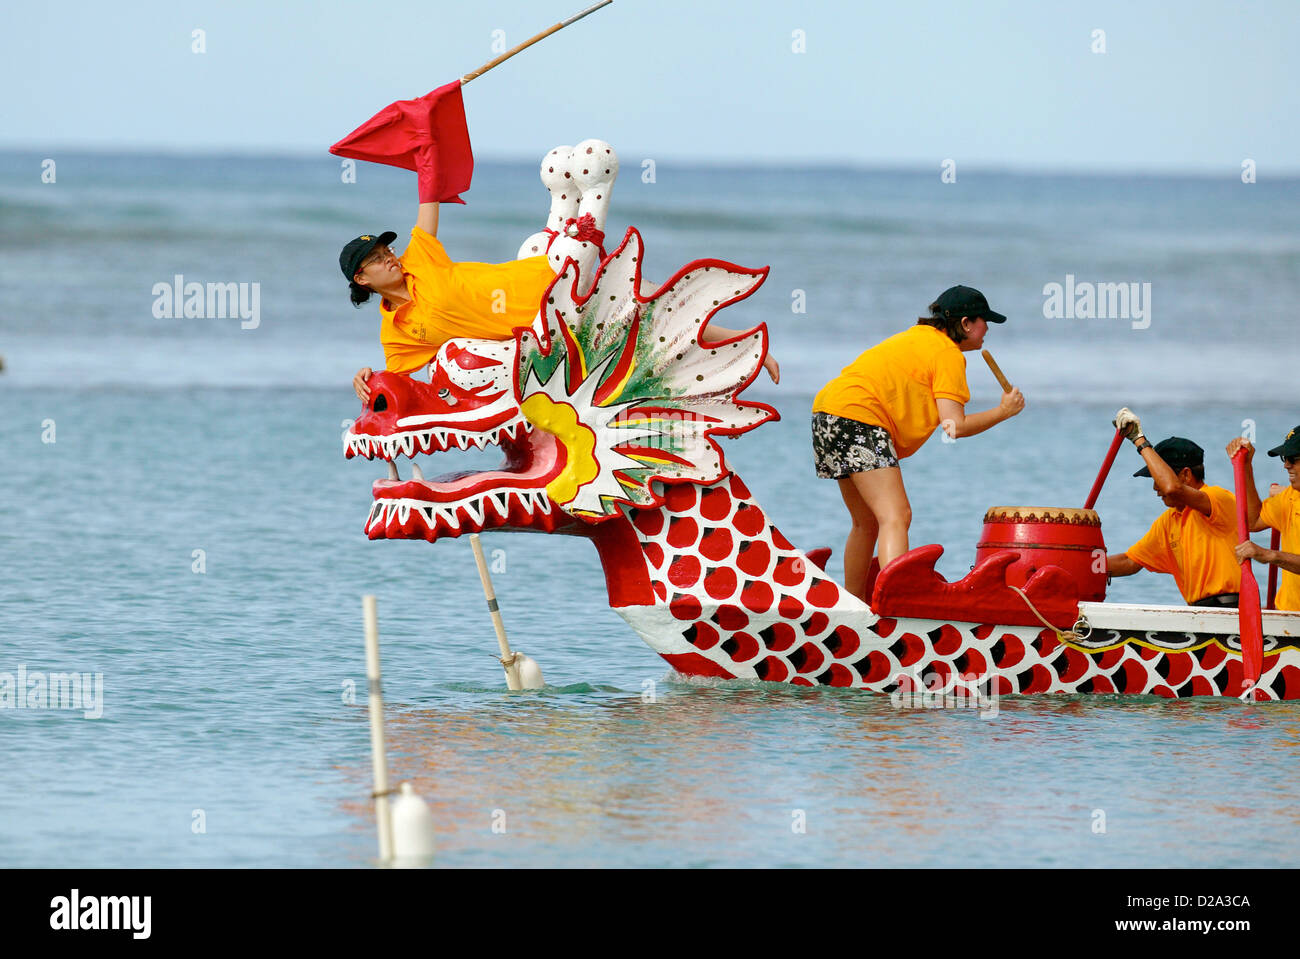 Honolulu Hawaii Dragon Boat Race.Extracteur Drapeau Dragon Boat Festivals (Tuen Ng) a débuté en quatrième siècle avant J.C. en Chine 53 Banque D'Images